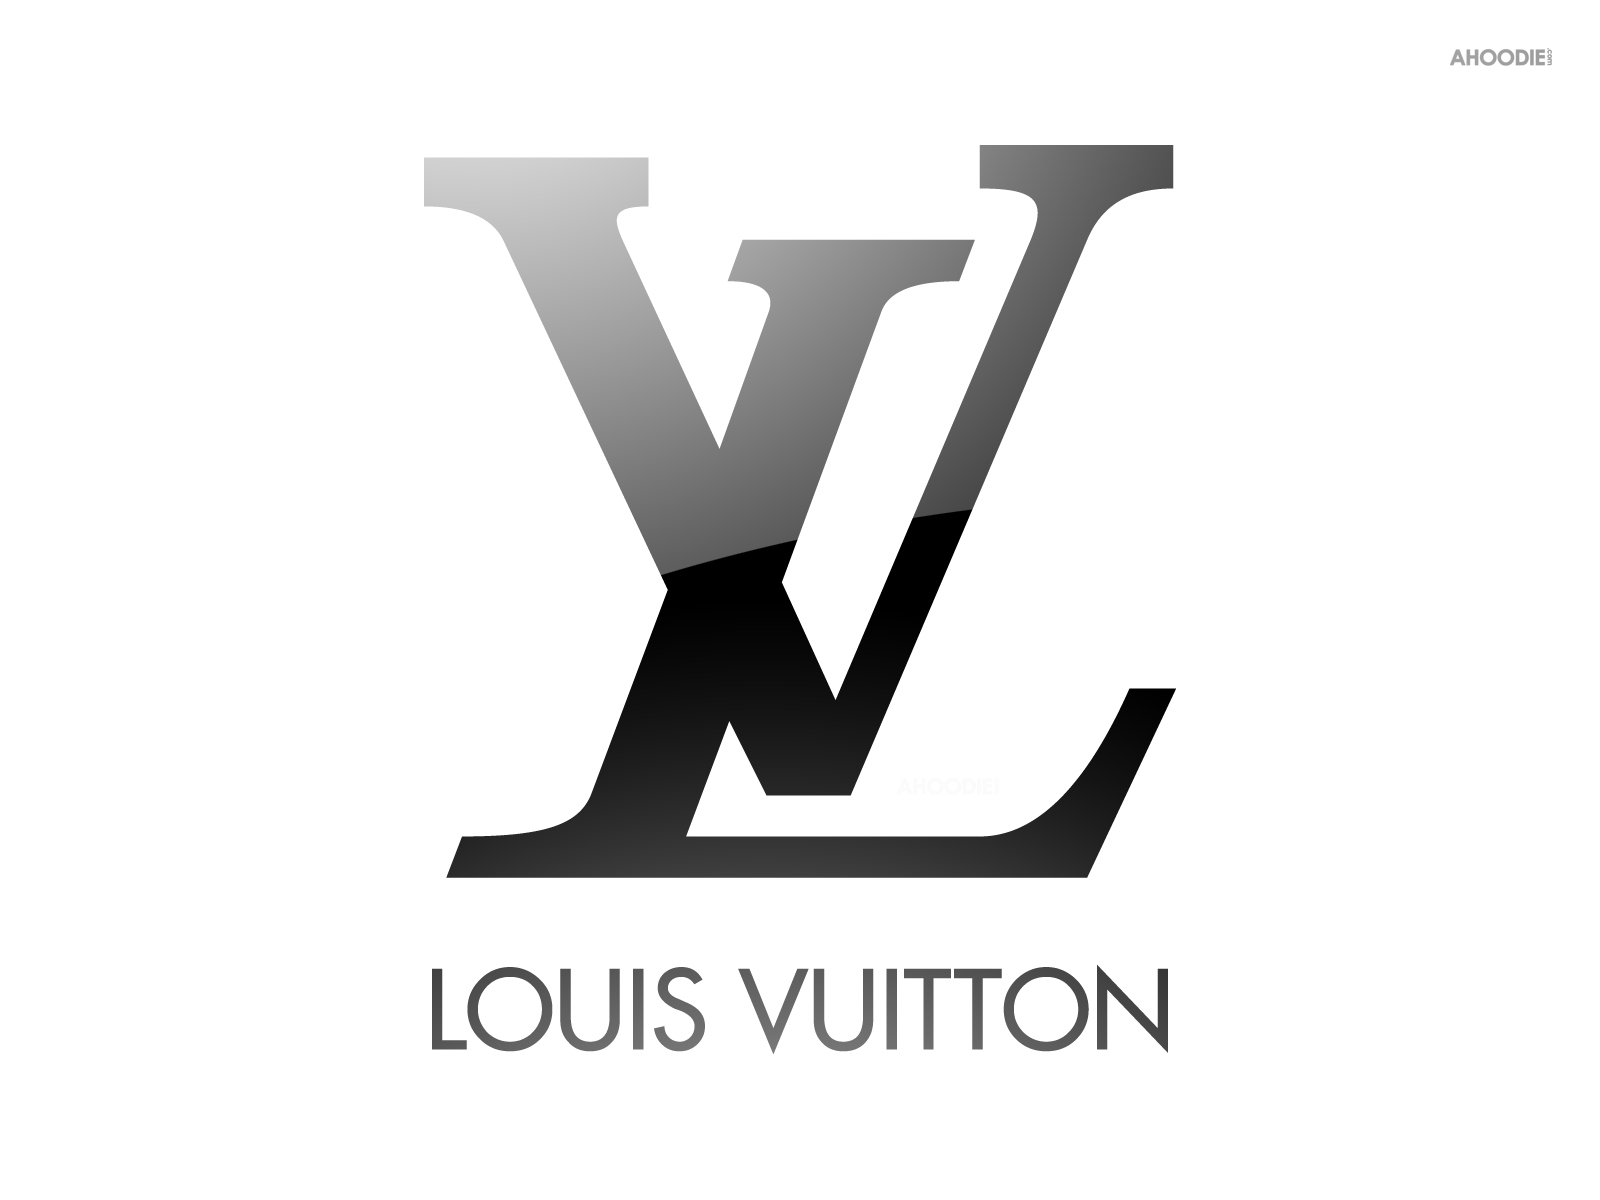 Louis vuitton logo wallpaper white – Sfondo moderno